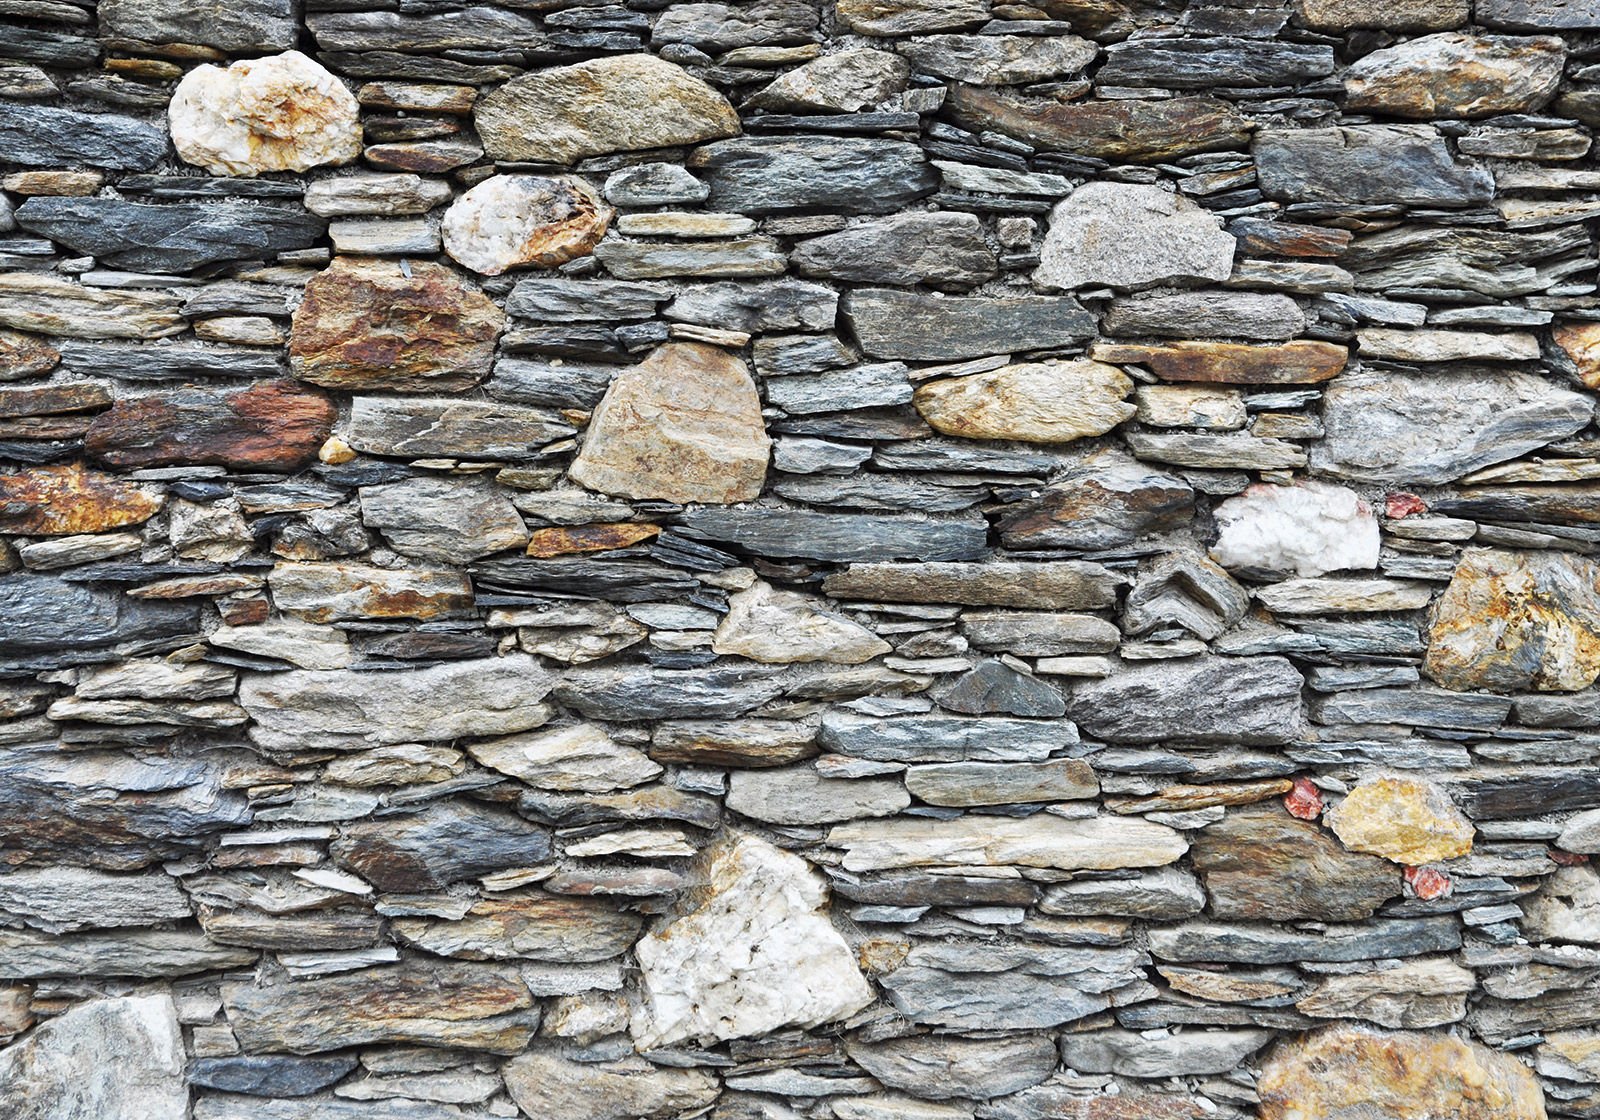 Vlies foto tapeta: Kameni zid (5) - 300x210 cm